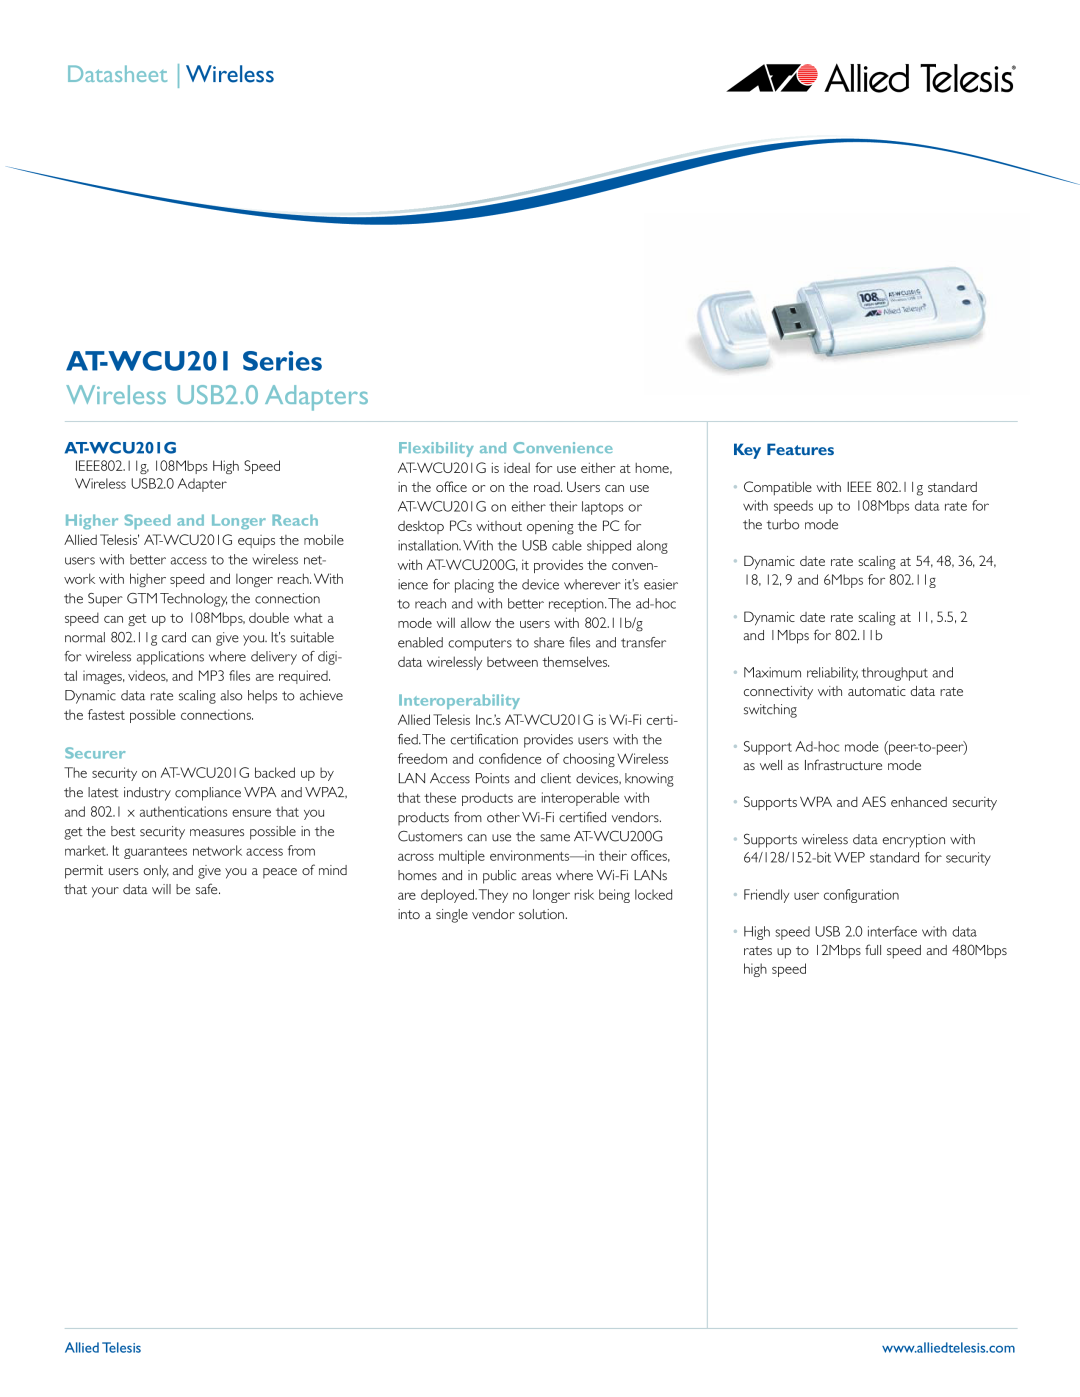 Allied Telesis manual Wireless USB2.0 Adapters, AT-WCU201G, Key Features, AT-WCU201 Series, Datasheet Wireless 